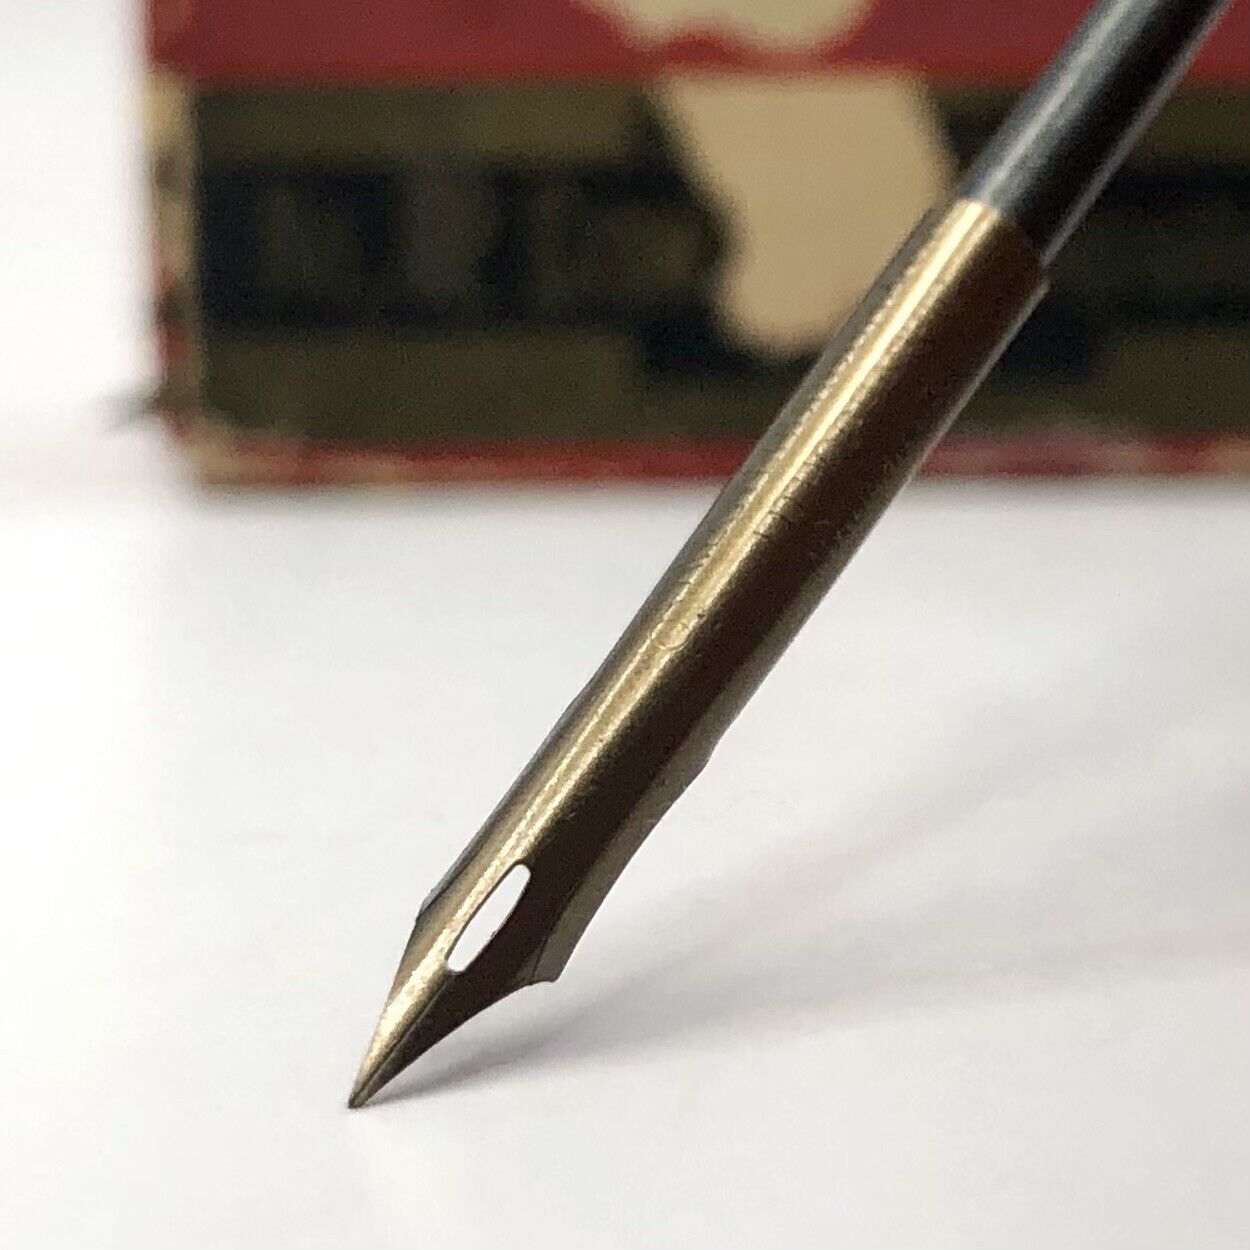 x5 Esterbrook 62 Crow Quill Lithographic Pen Nib - Mapping Dip Pen Nib Vintage Esterbrook